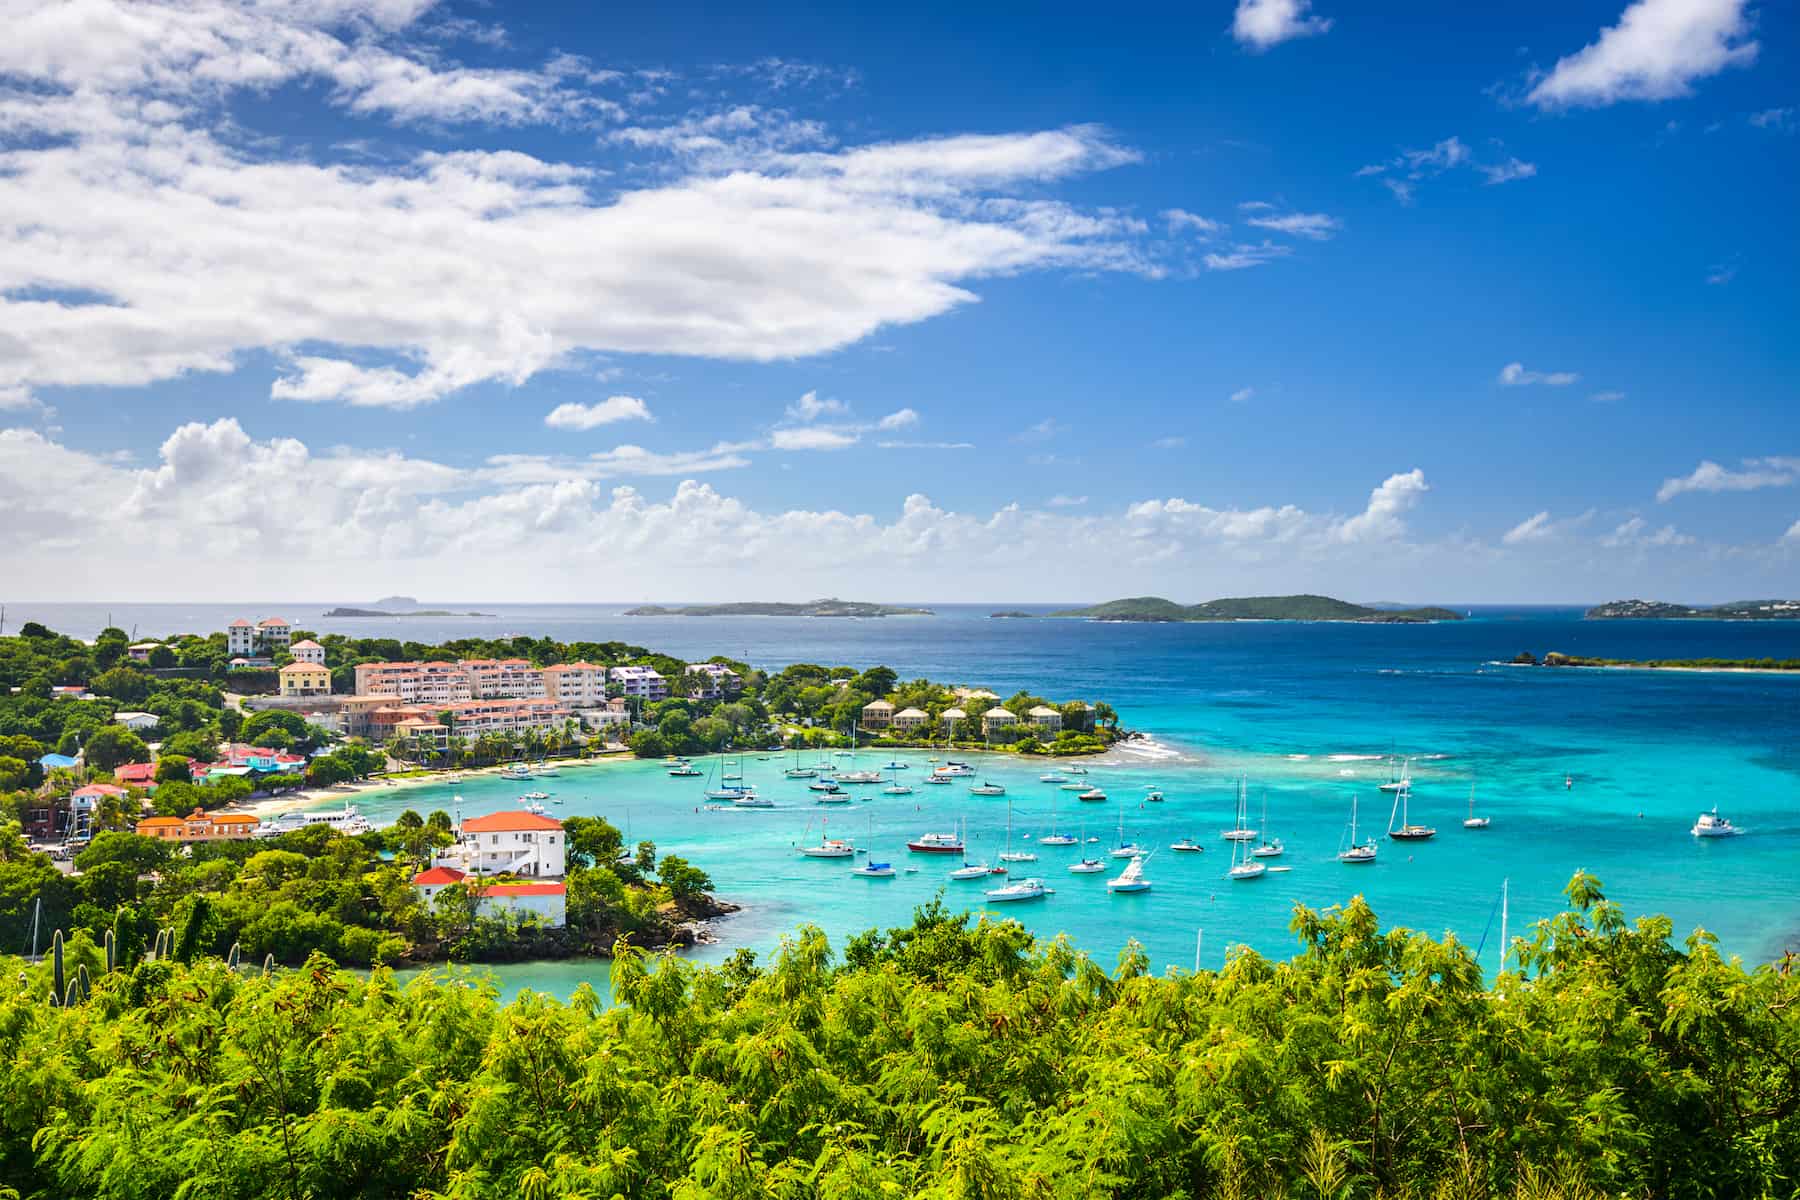 Cruz Bay, St John, United States Virgin Islands. Photo by SeanPavonePhoto, iStock